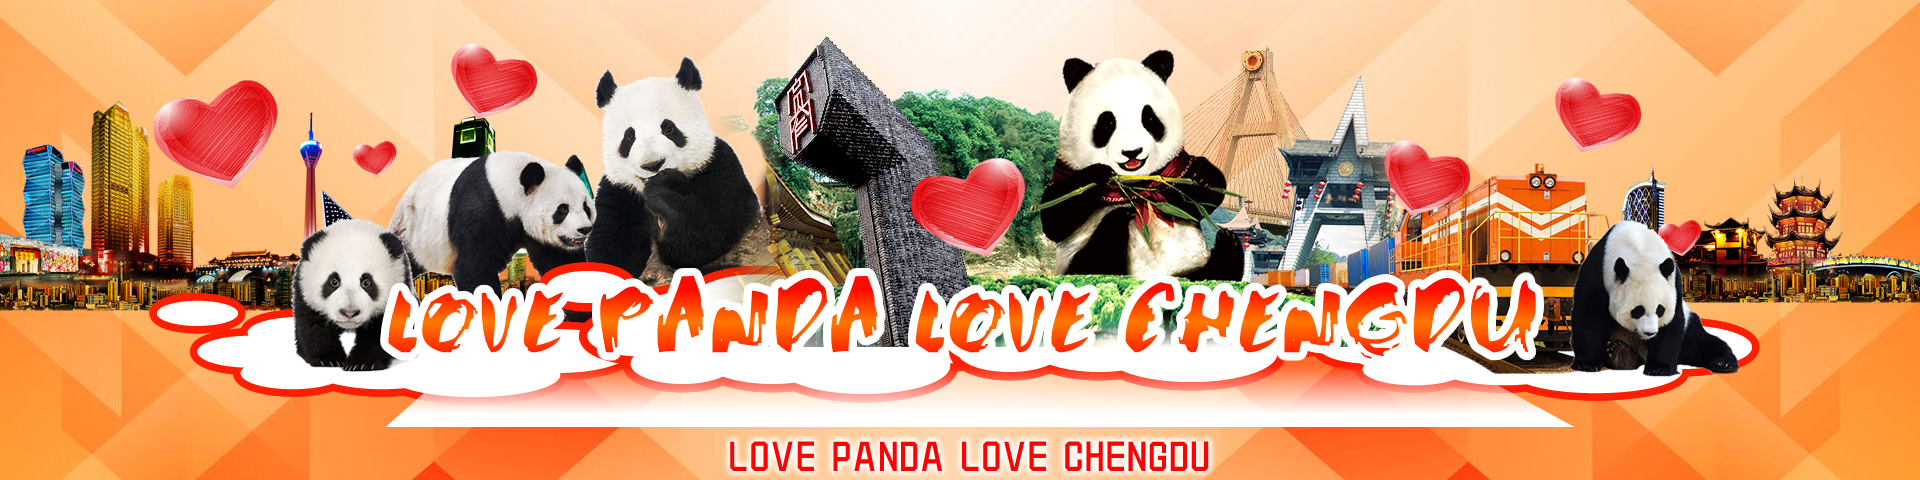 Love Panda Love Chengdu_fororder_頭圖